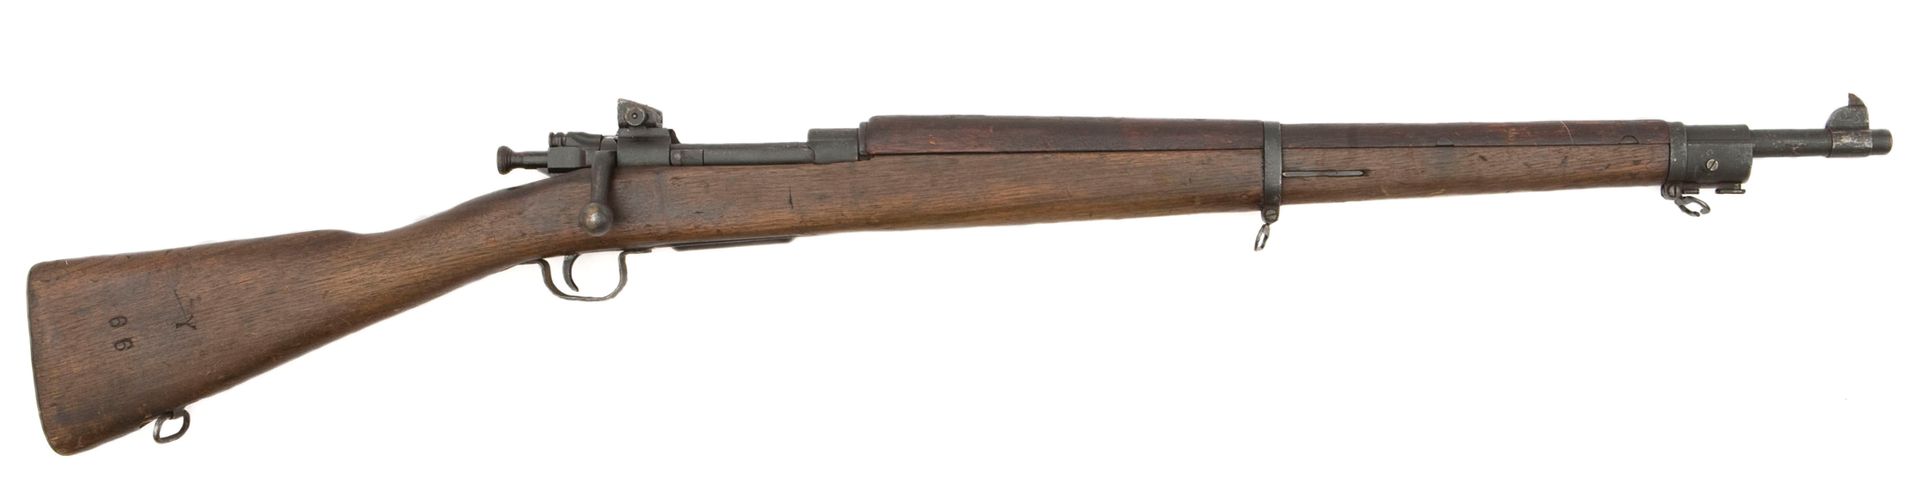 WW II-era M1903A3 Springfields were used while M1 Garands were in short supply.